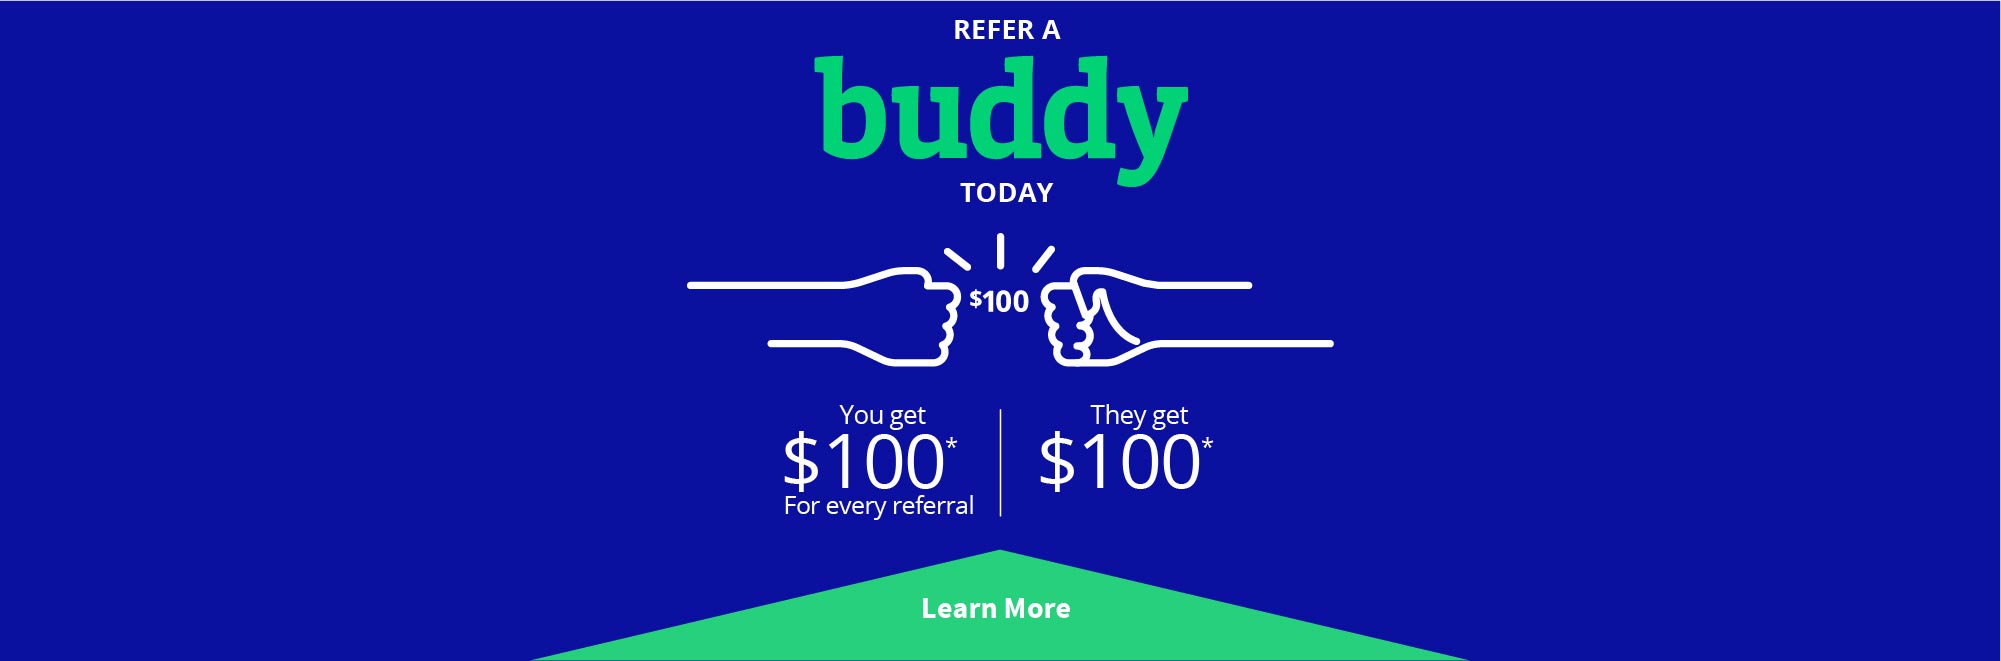 Refer a Buddy